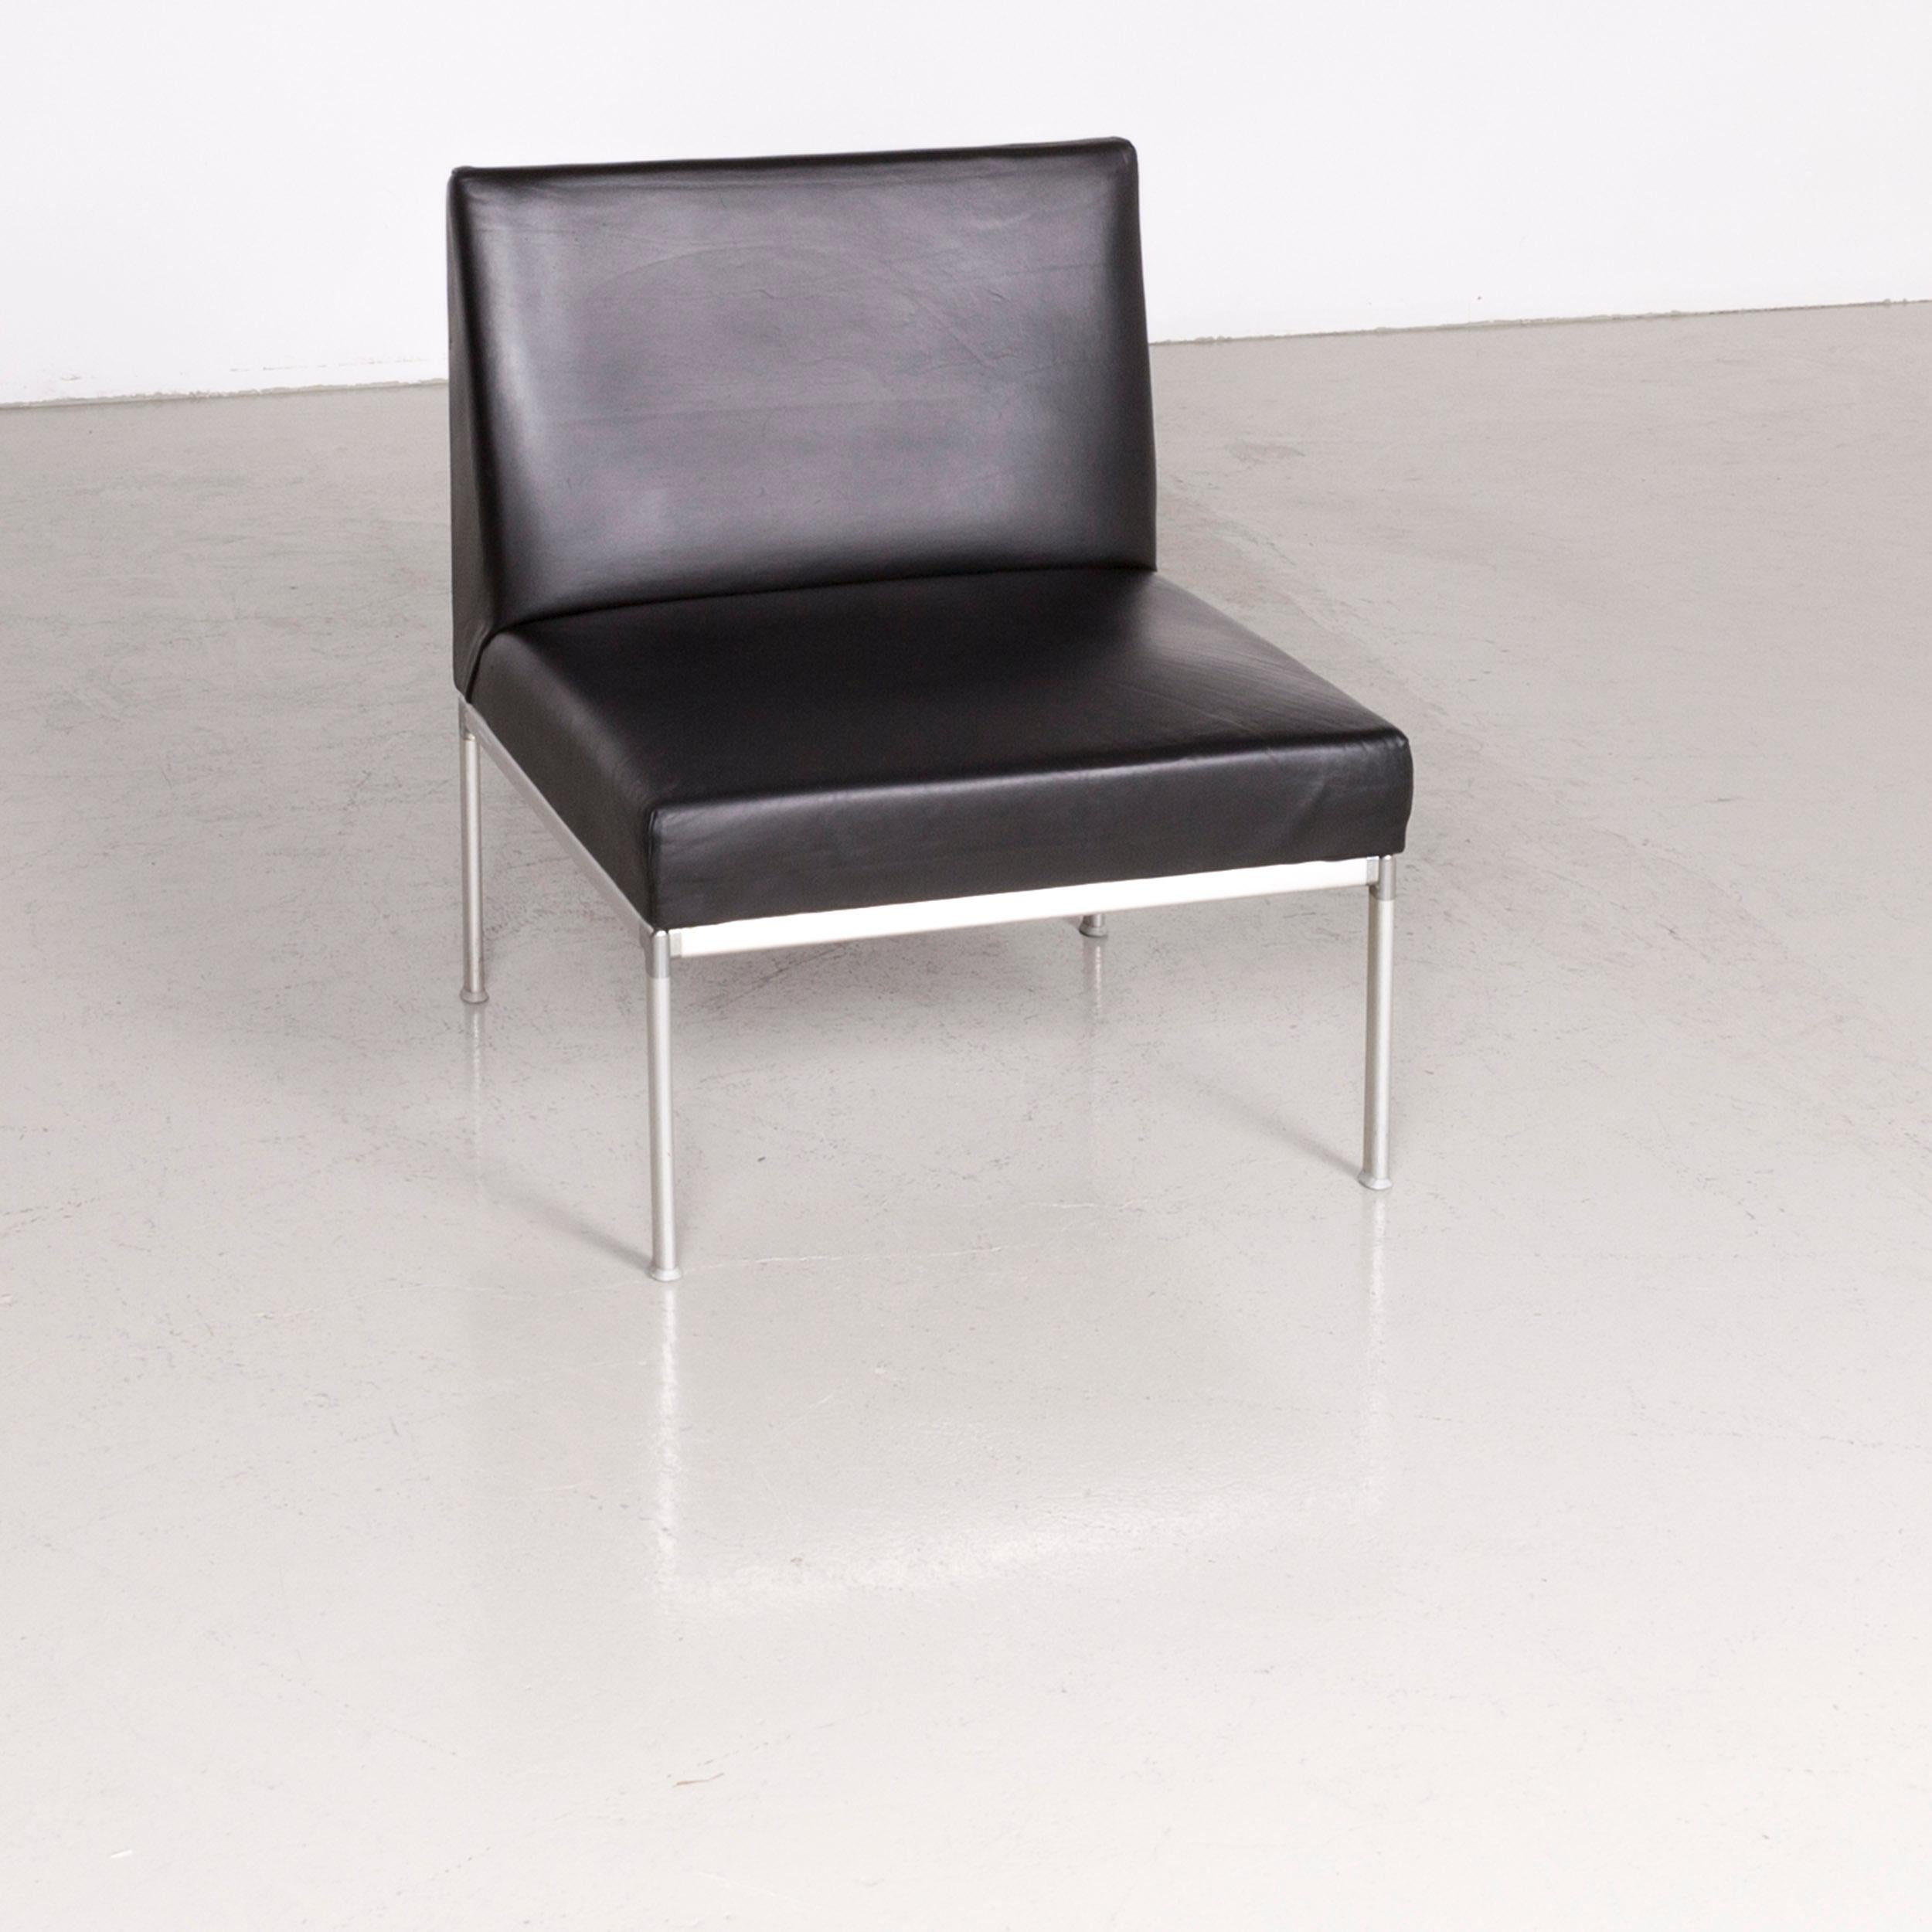 Interlübke designer leather chair black.